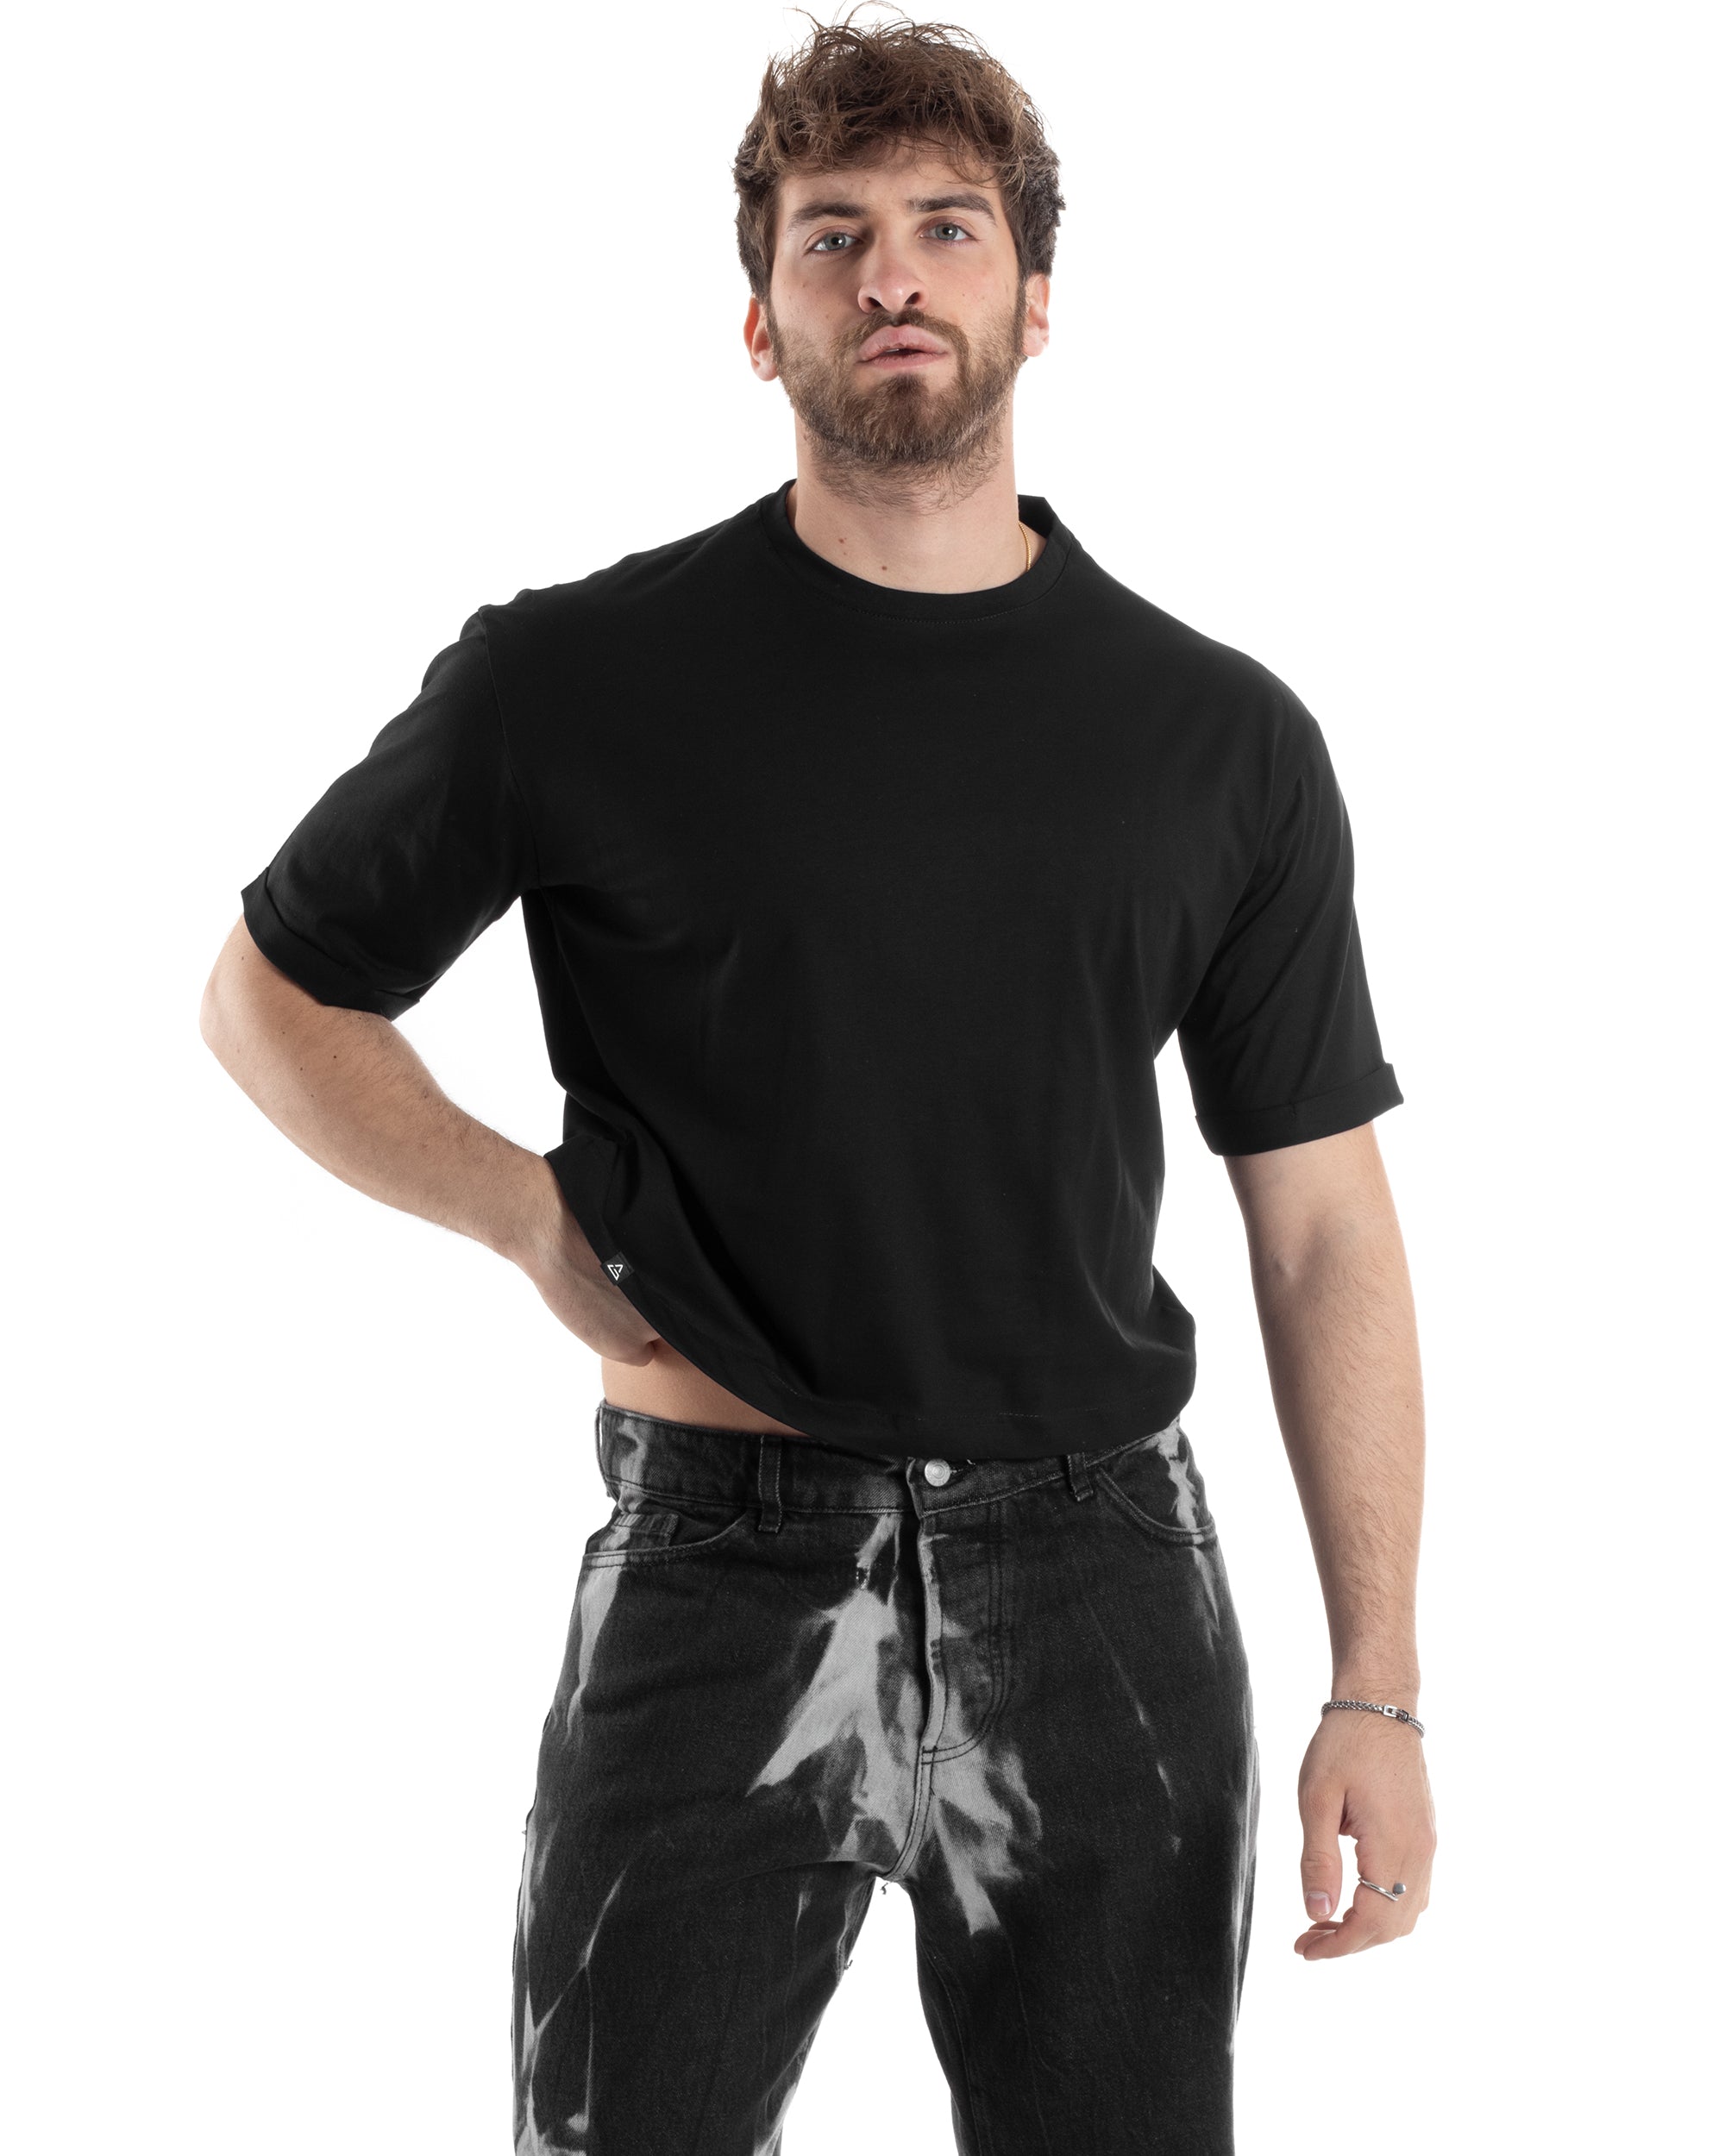 T-shirt Uomo Cropped Corta Boxy Fit Tinta Unita Nero Casual GIOSAL-TS3010A